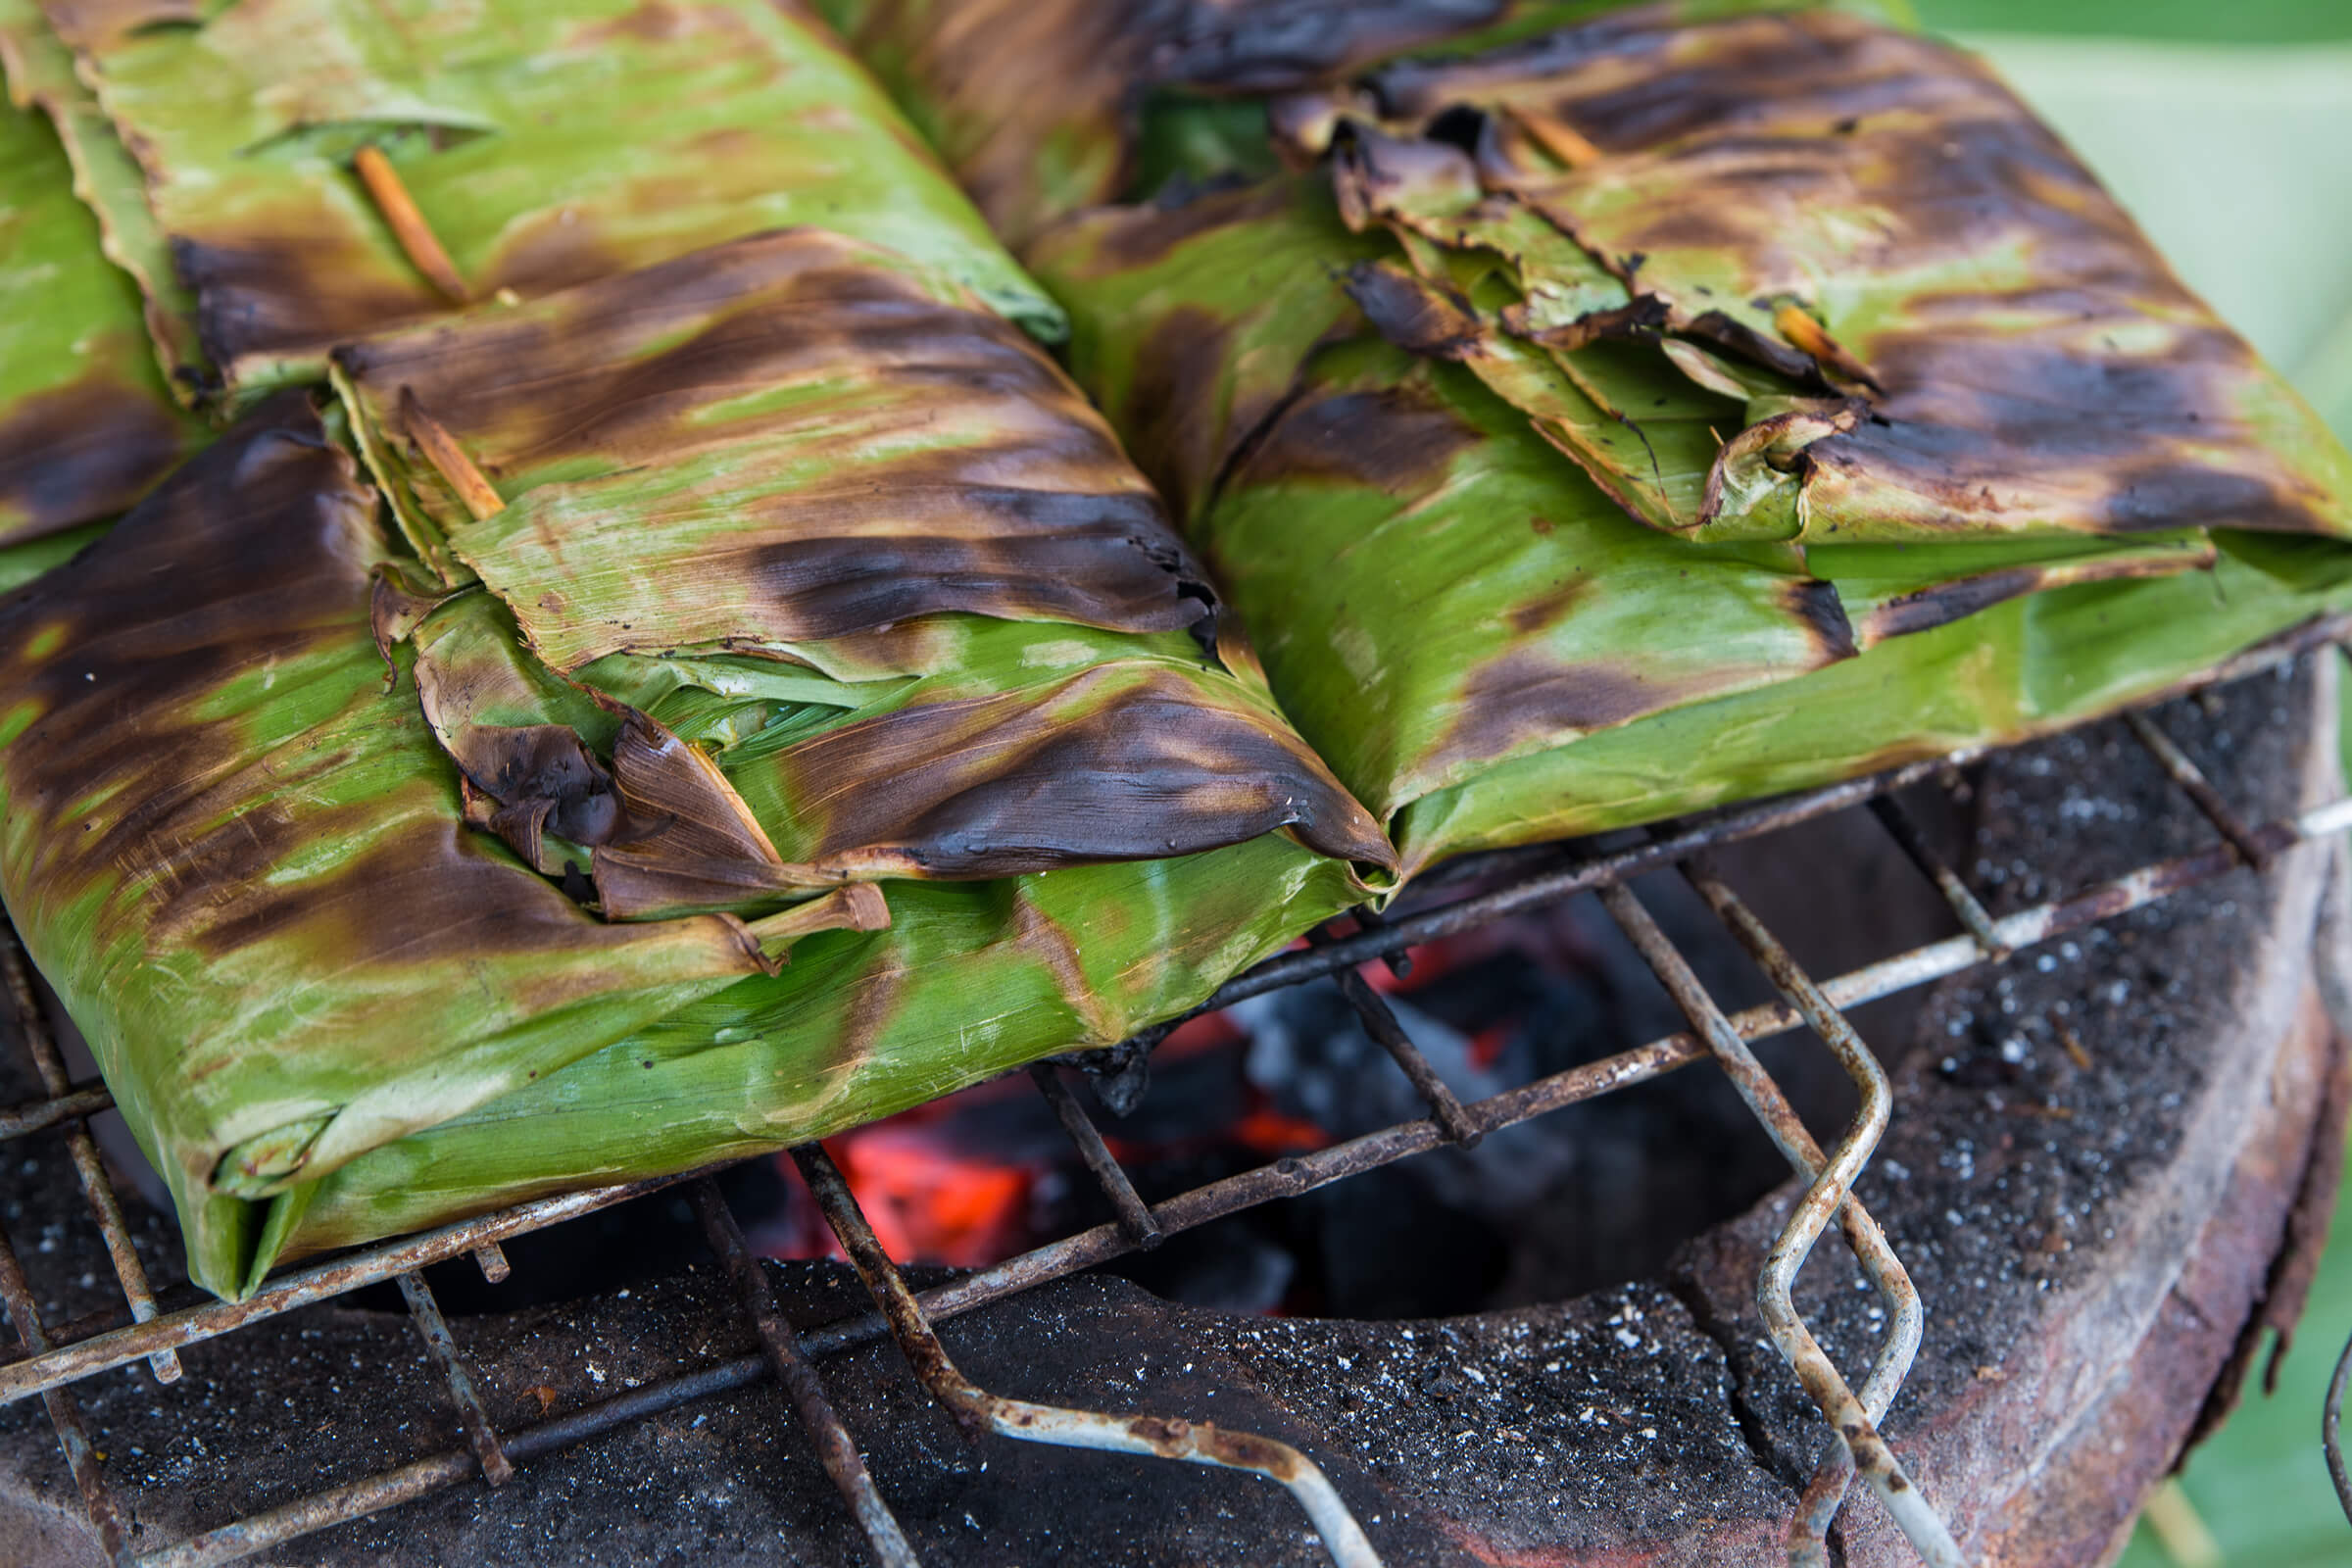 https://www.eatingthaifood.com/wp-content/uploads/2015/04/thai-grillled-fish-recipe.jpg